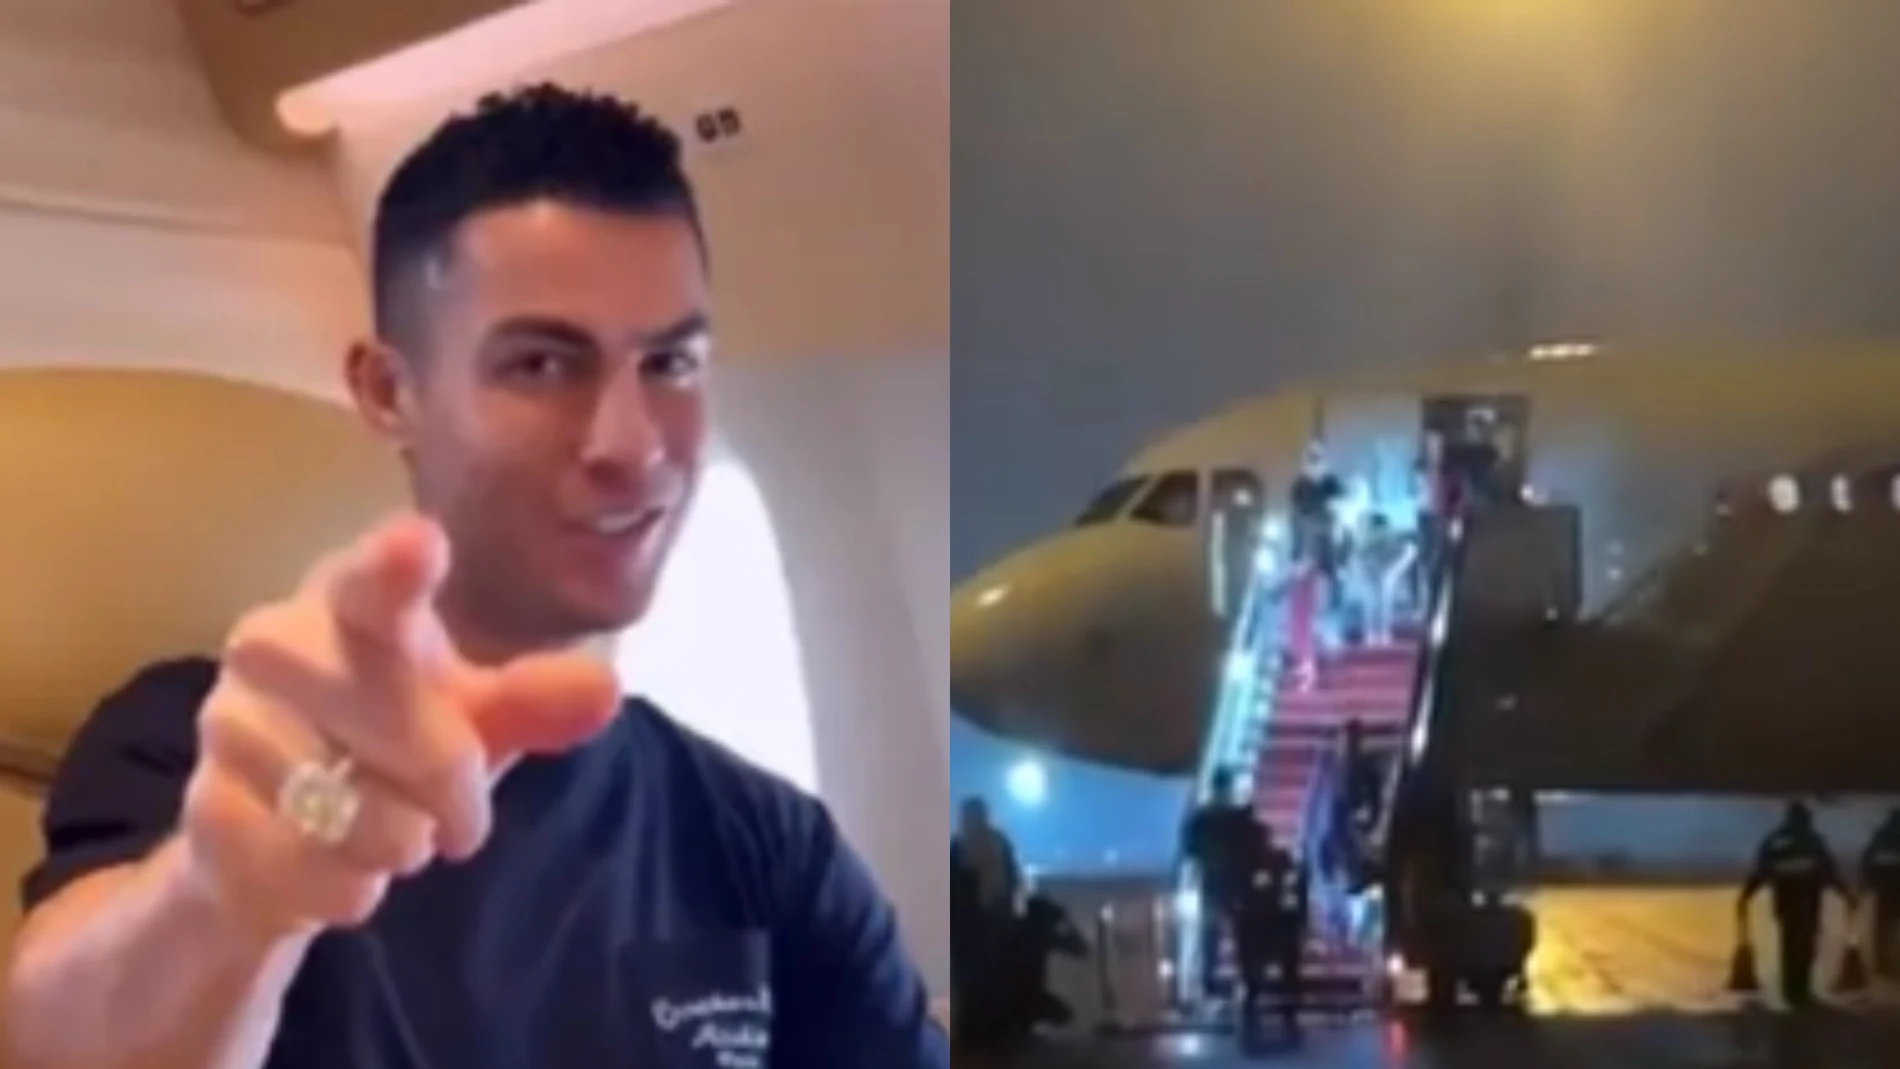 El lujoso jet privado de Cristiano Ronaldo